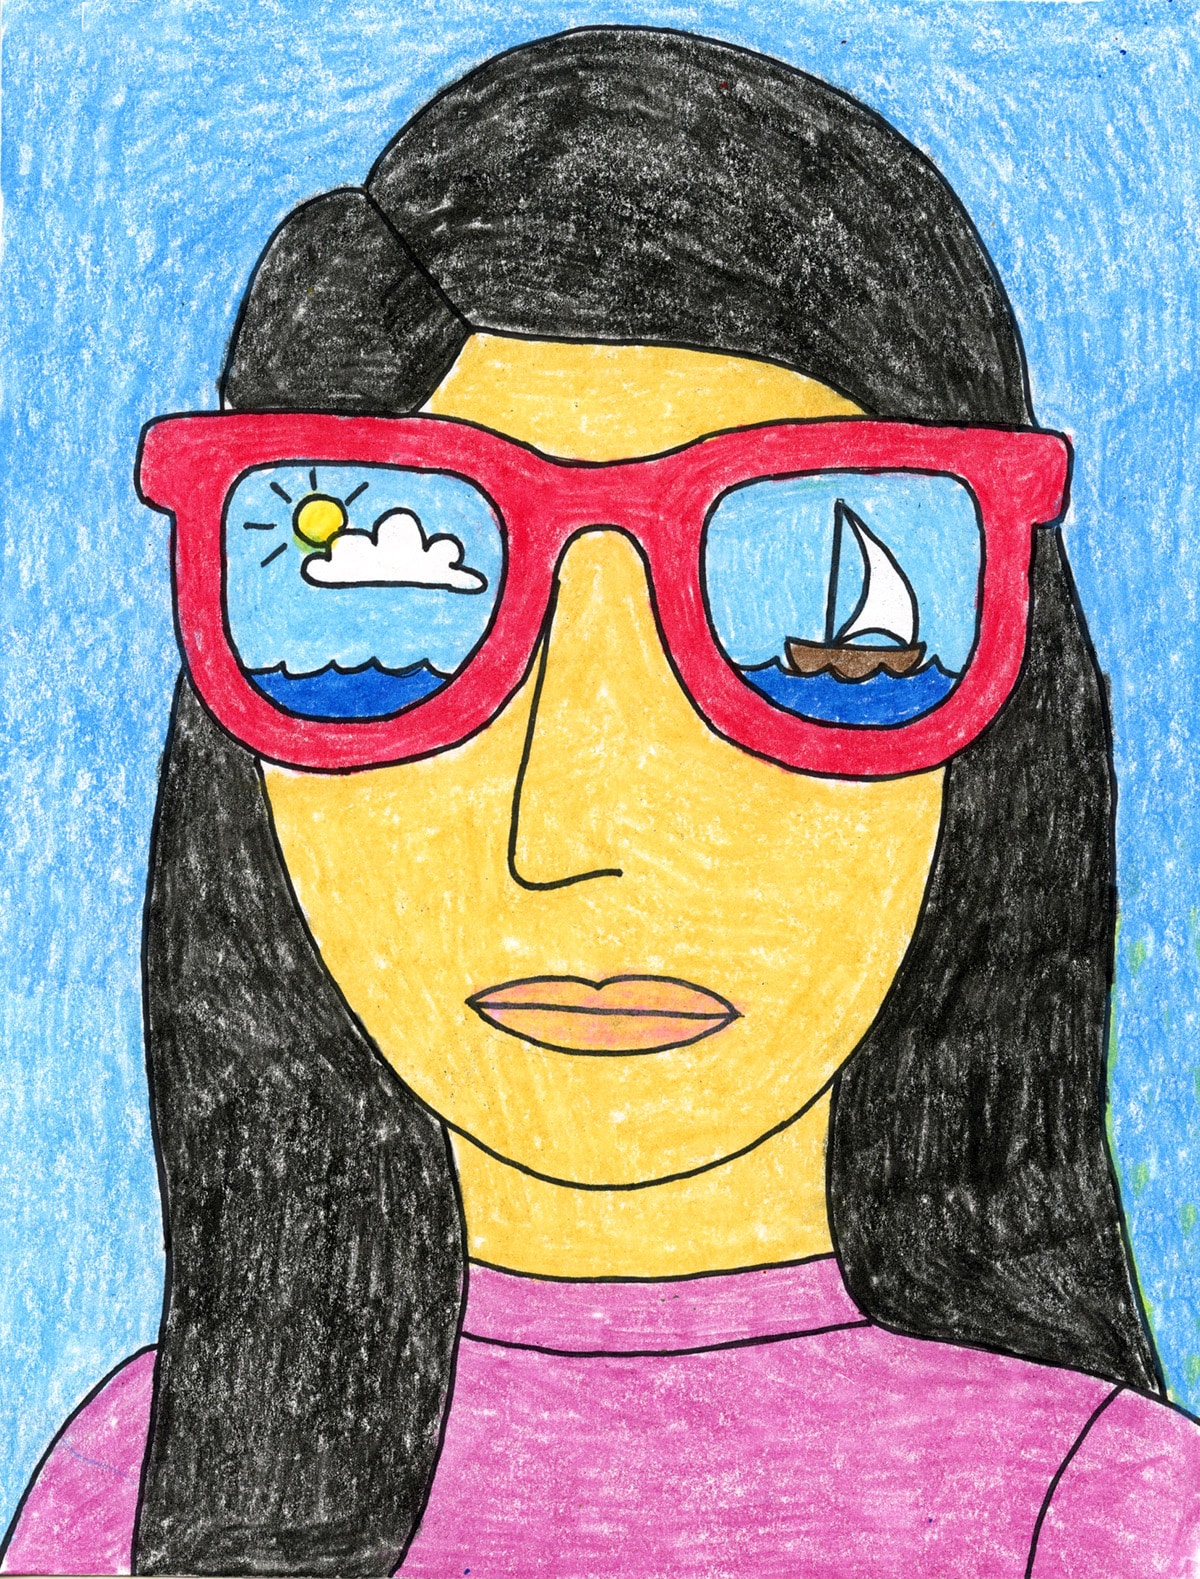 Sunglasses Self Portrait Art Project: Easy Lesson for Kids